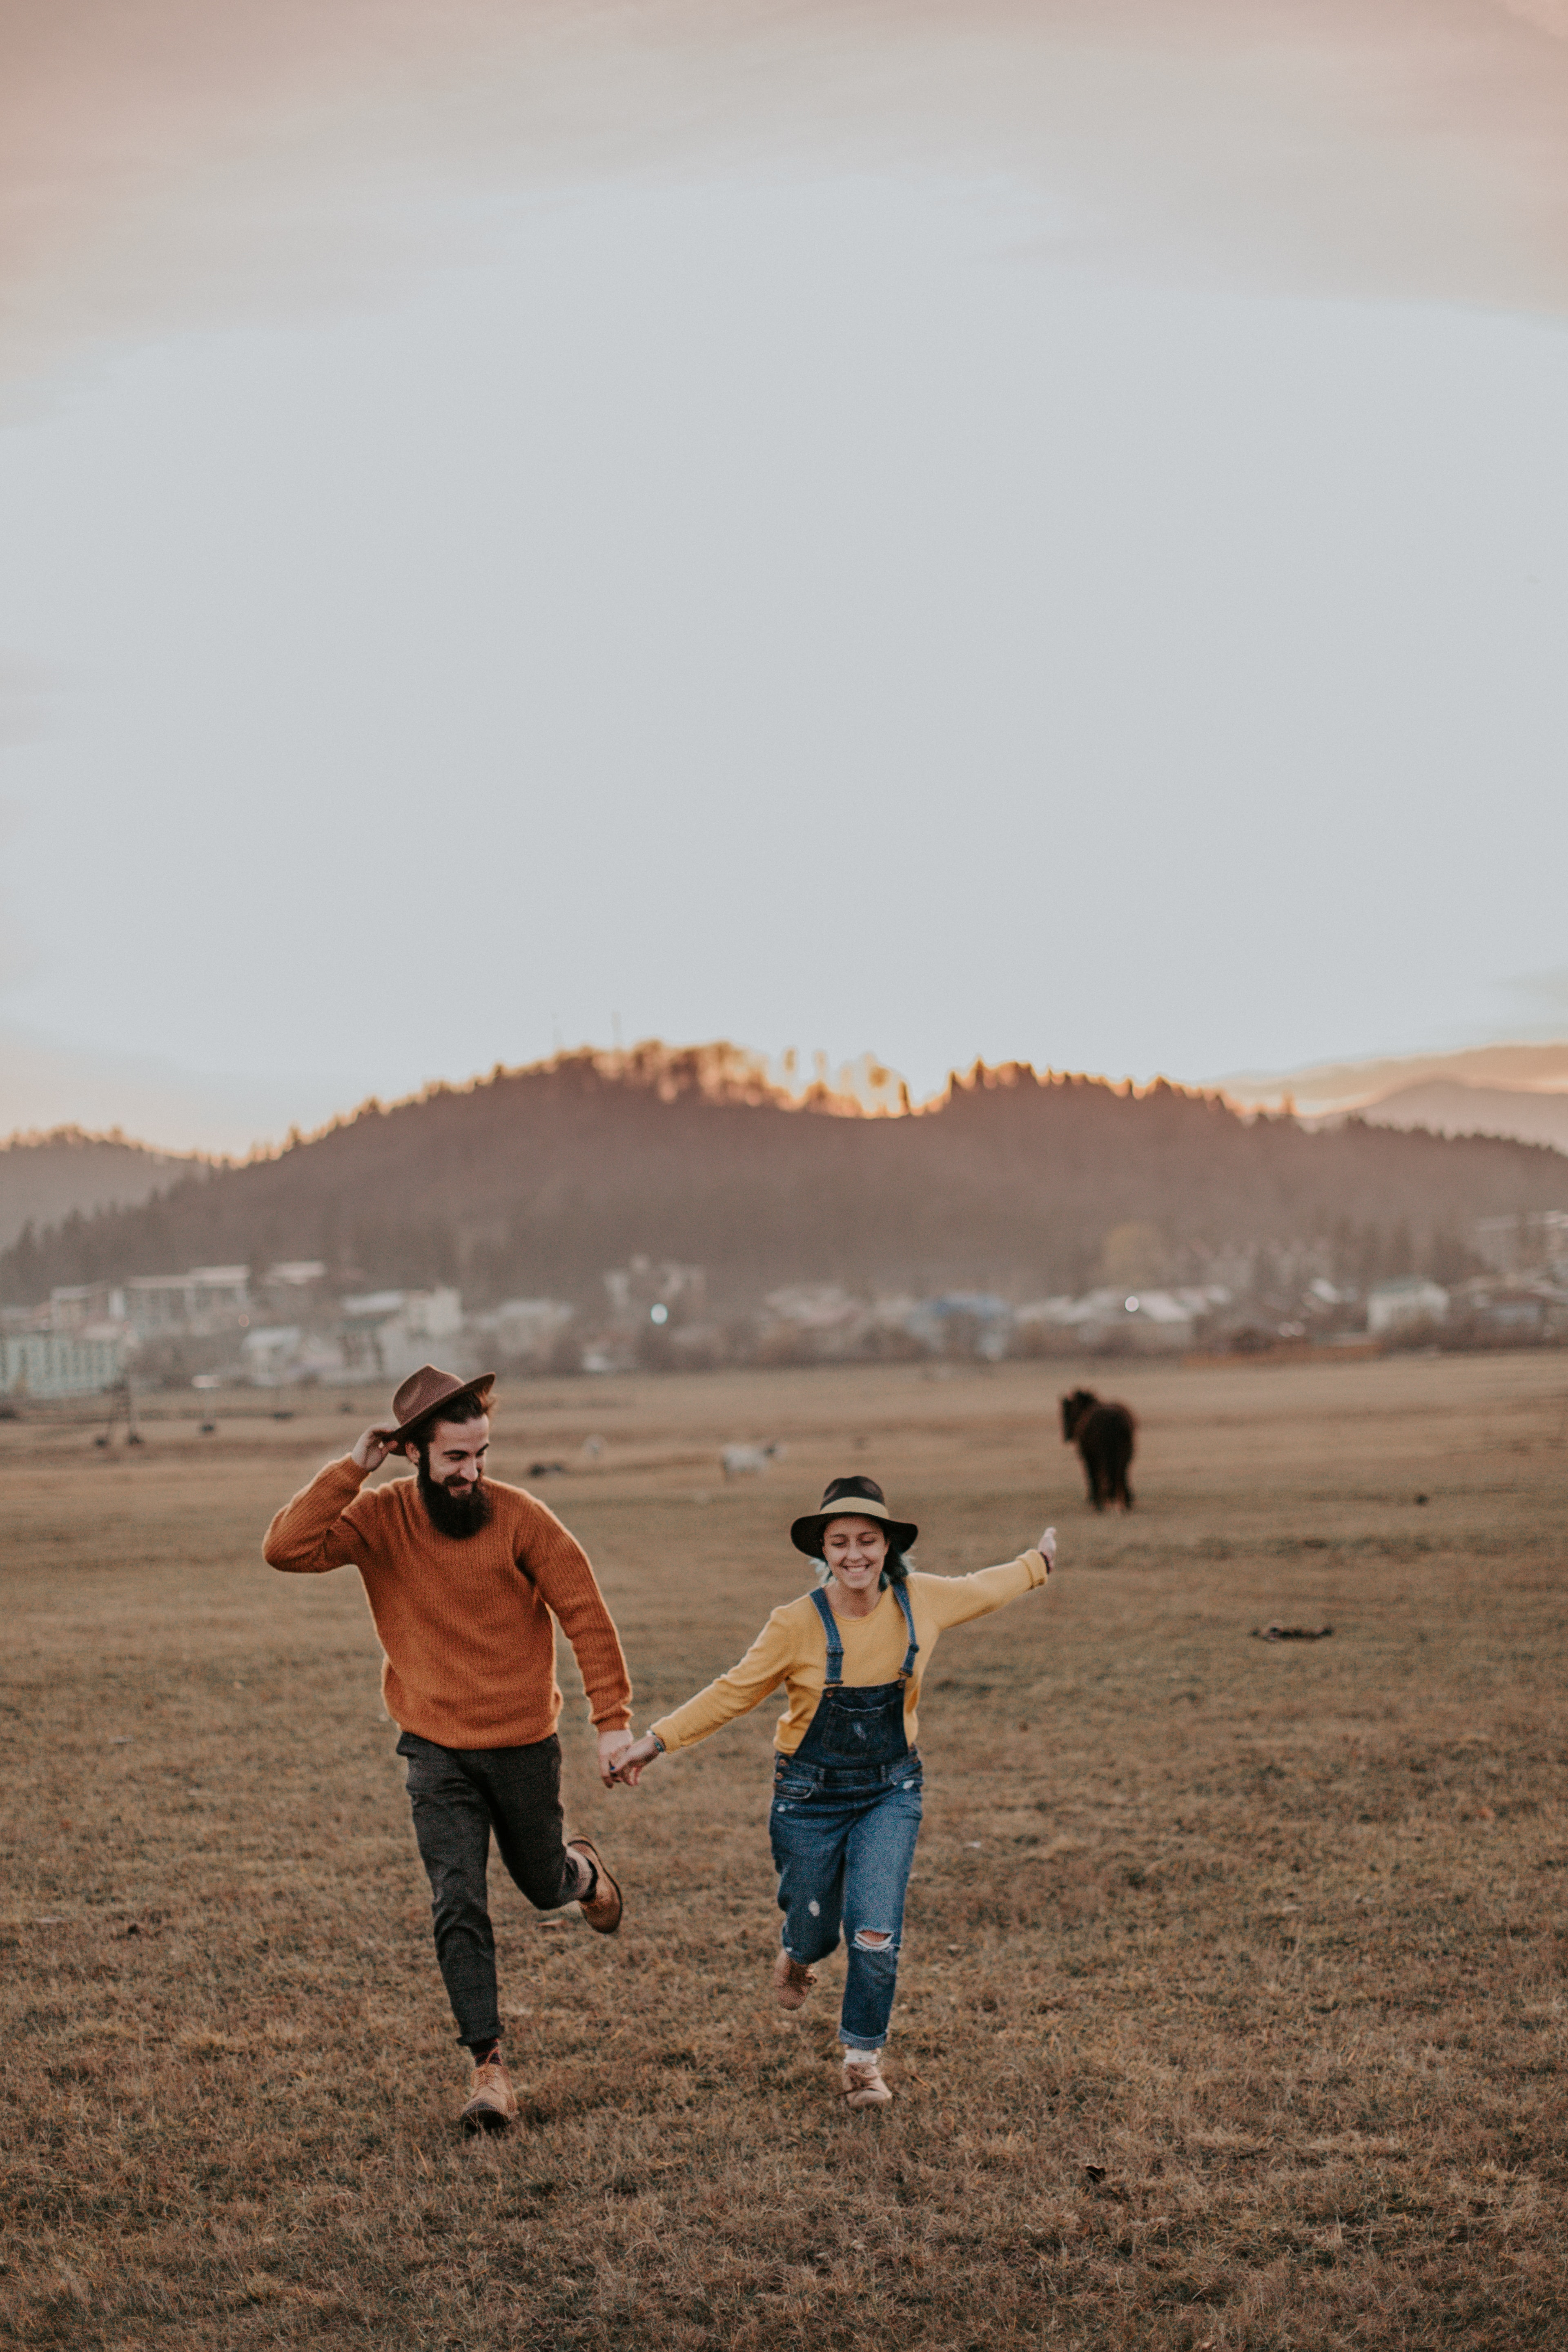 A couple running through a field. | Source: Pexels